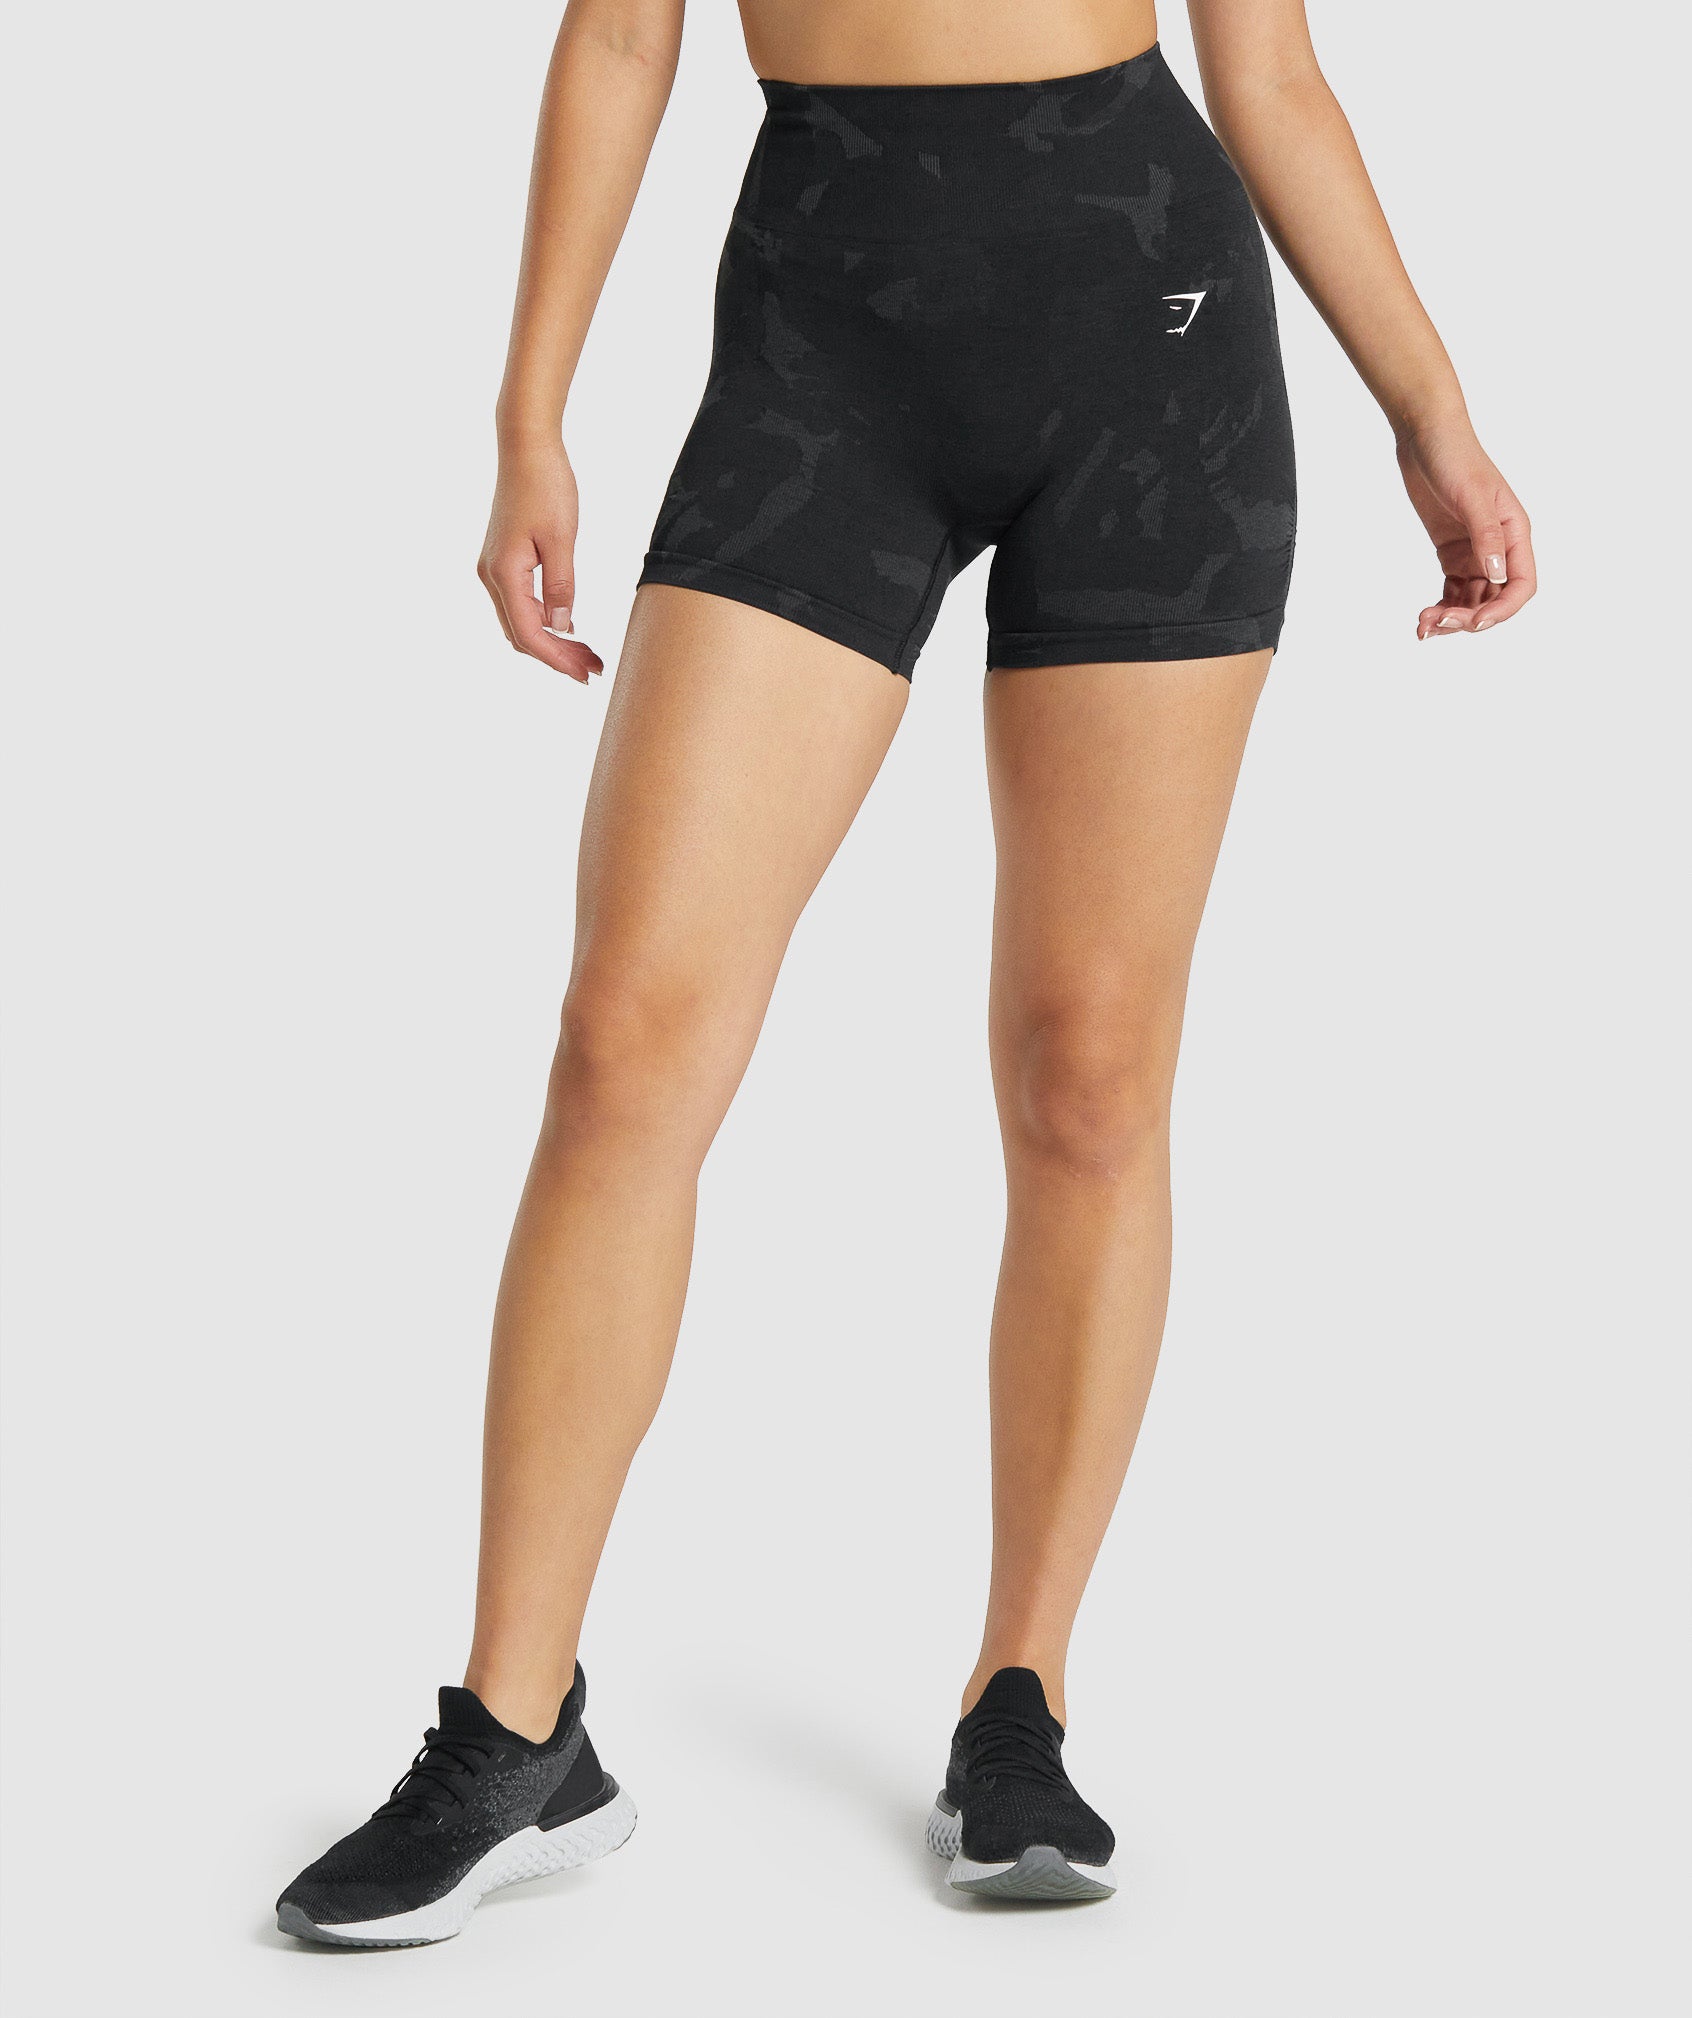 BNIB Gymshark camo shorts (M), Women's Fashion, Activewear on